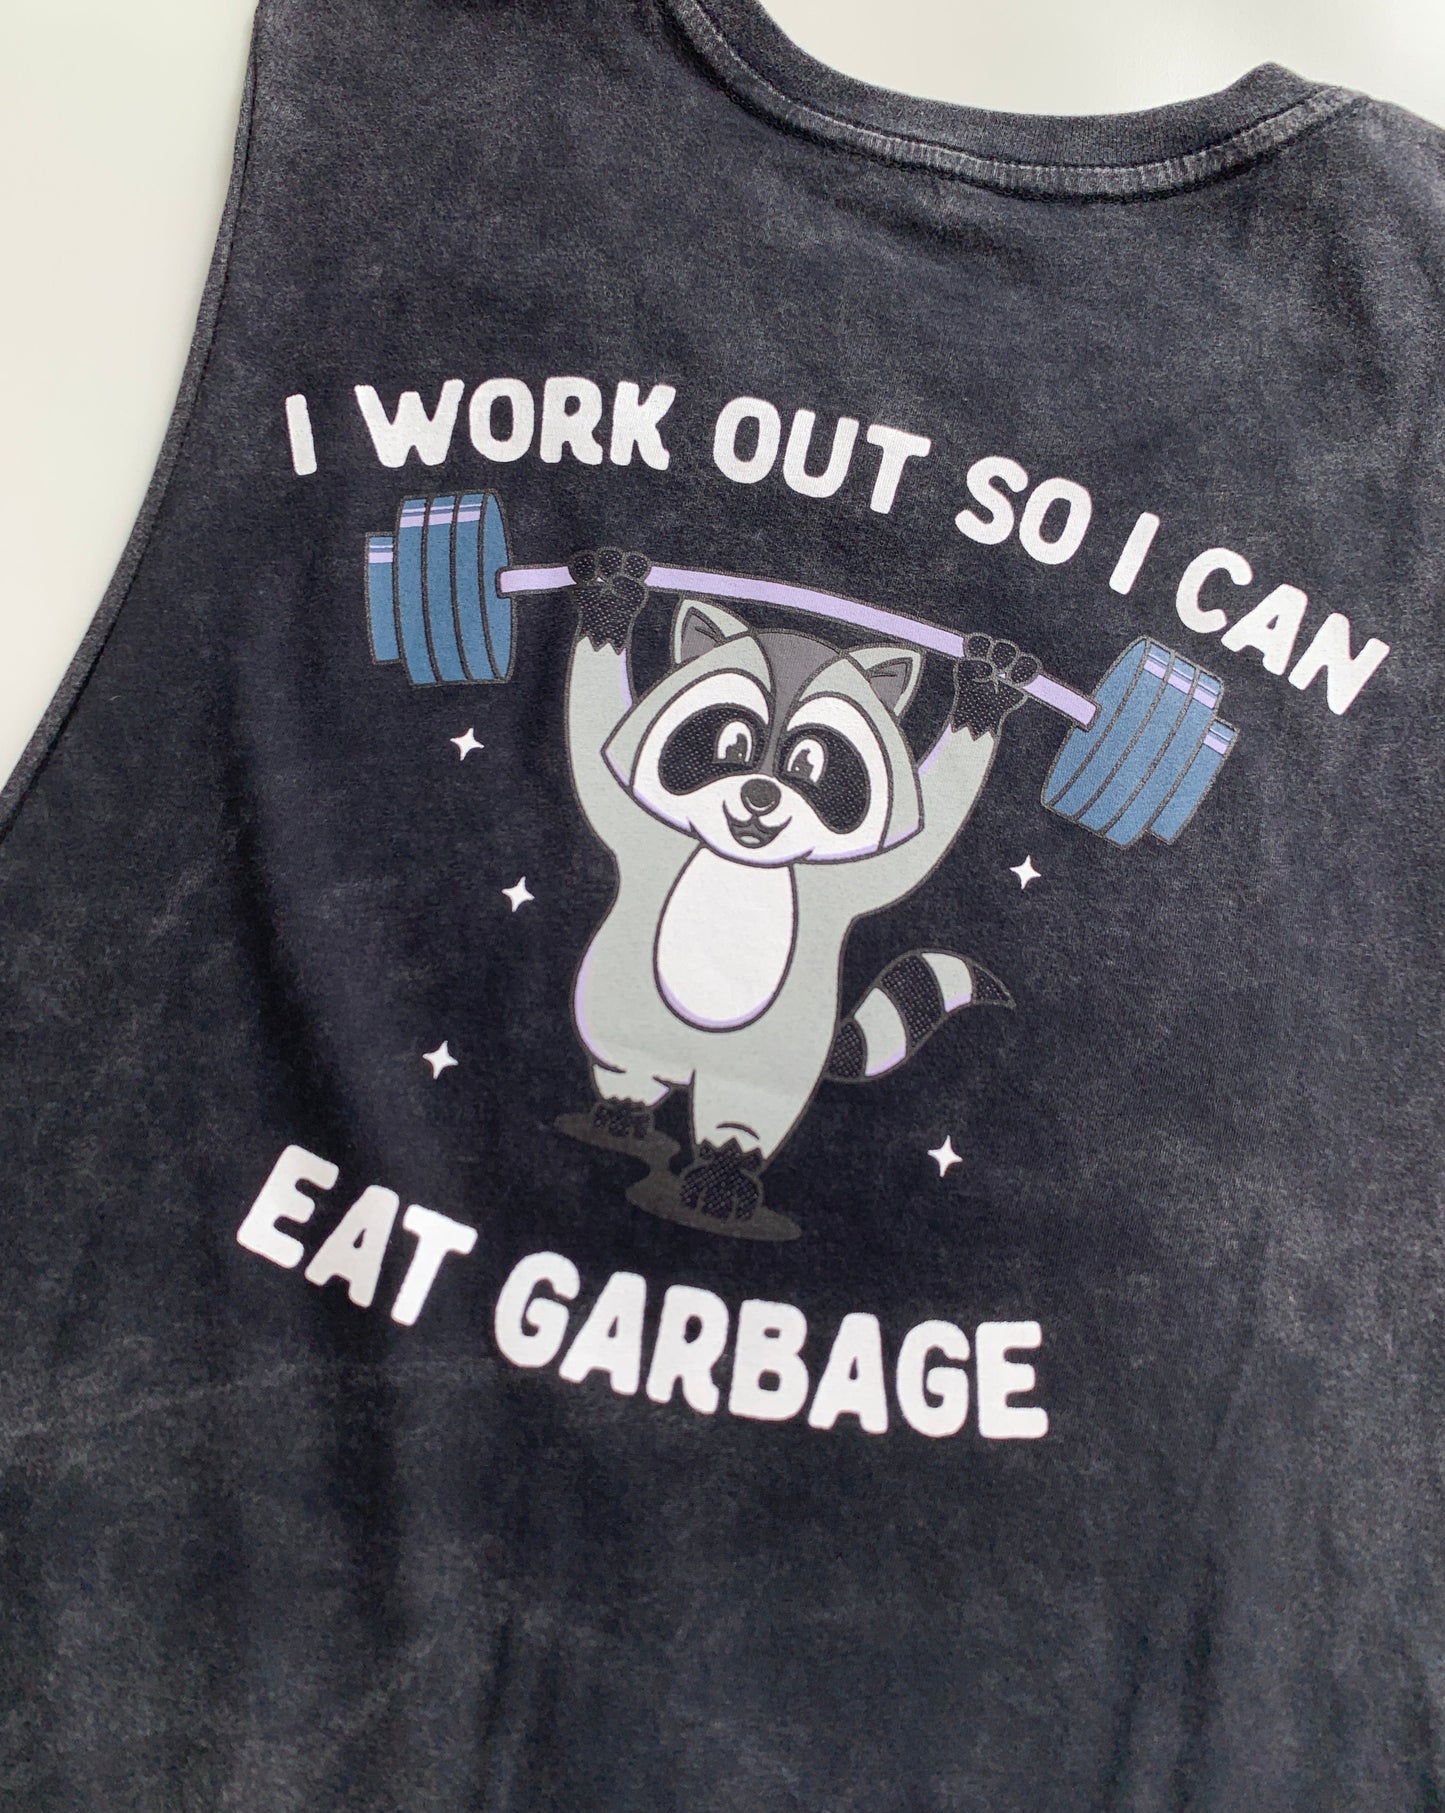 Workout to eat garbage muscle tank